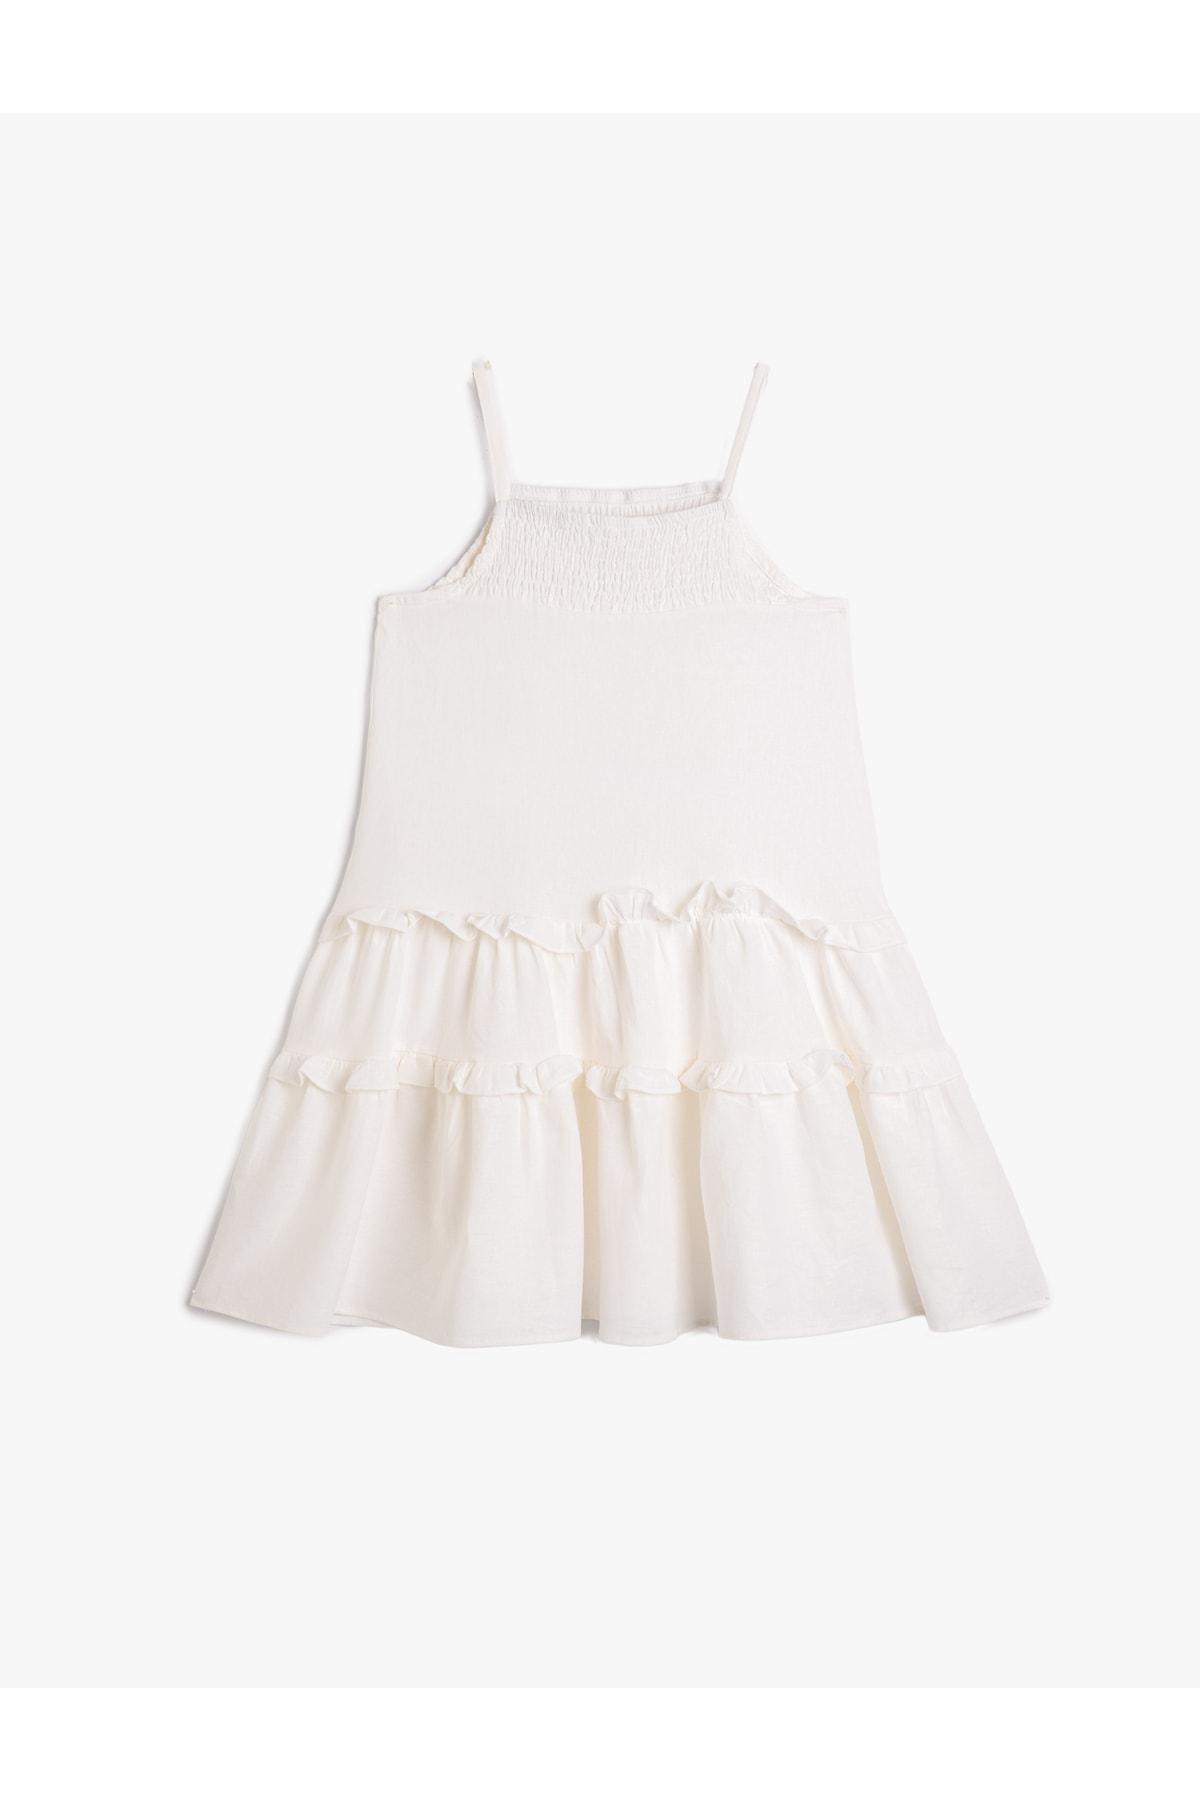 Koton - White Ruffle Dress, Kids Girls